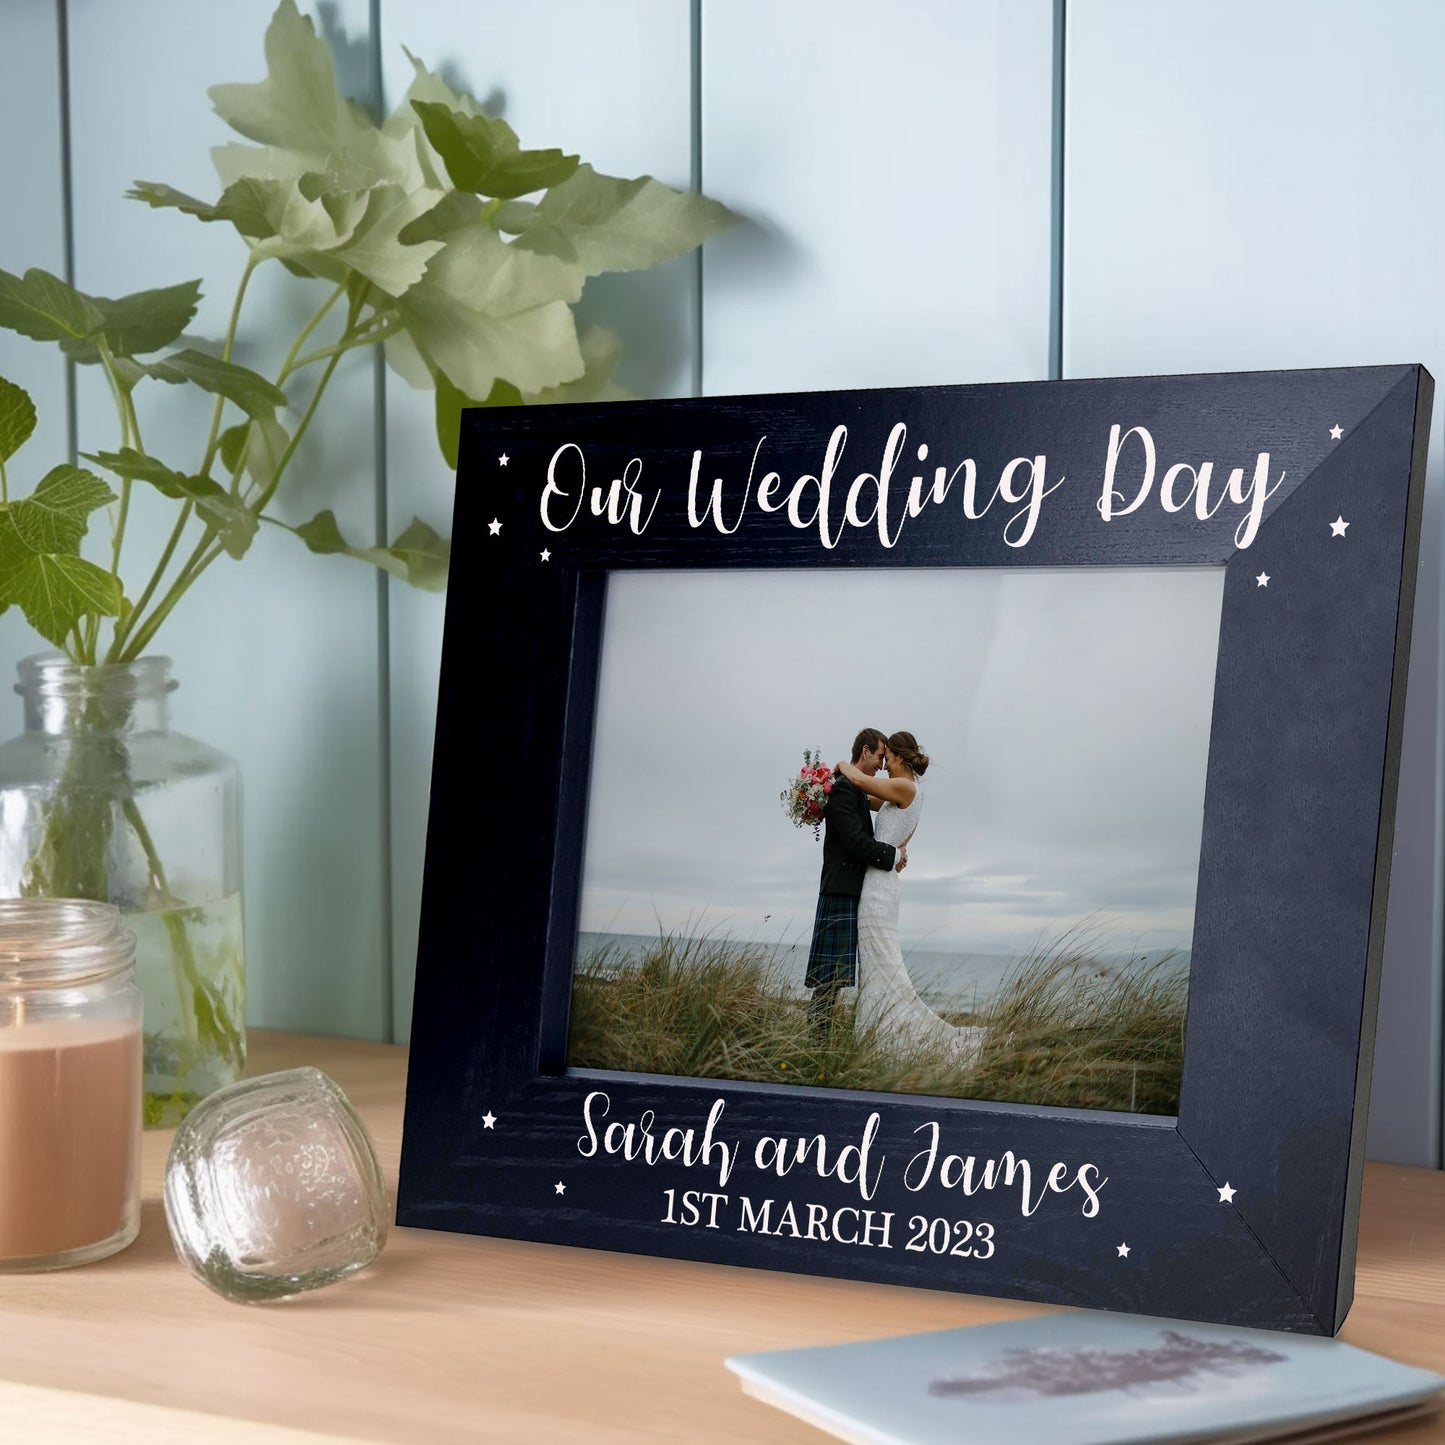 Personalised Wedding Gift Black Photo Frame For Wedding Day